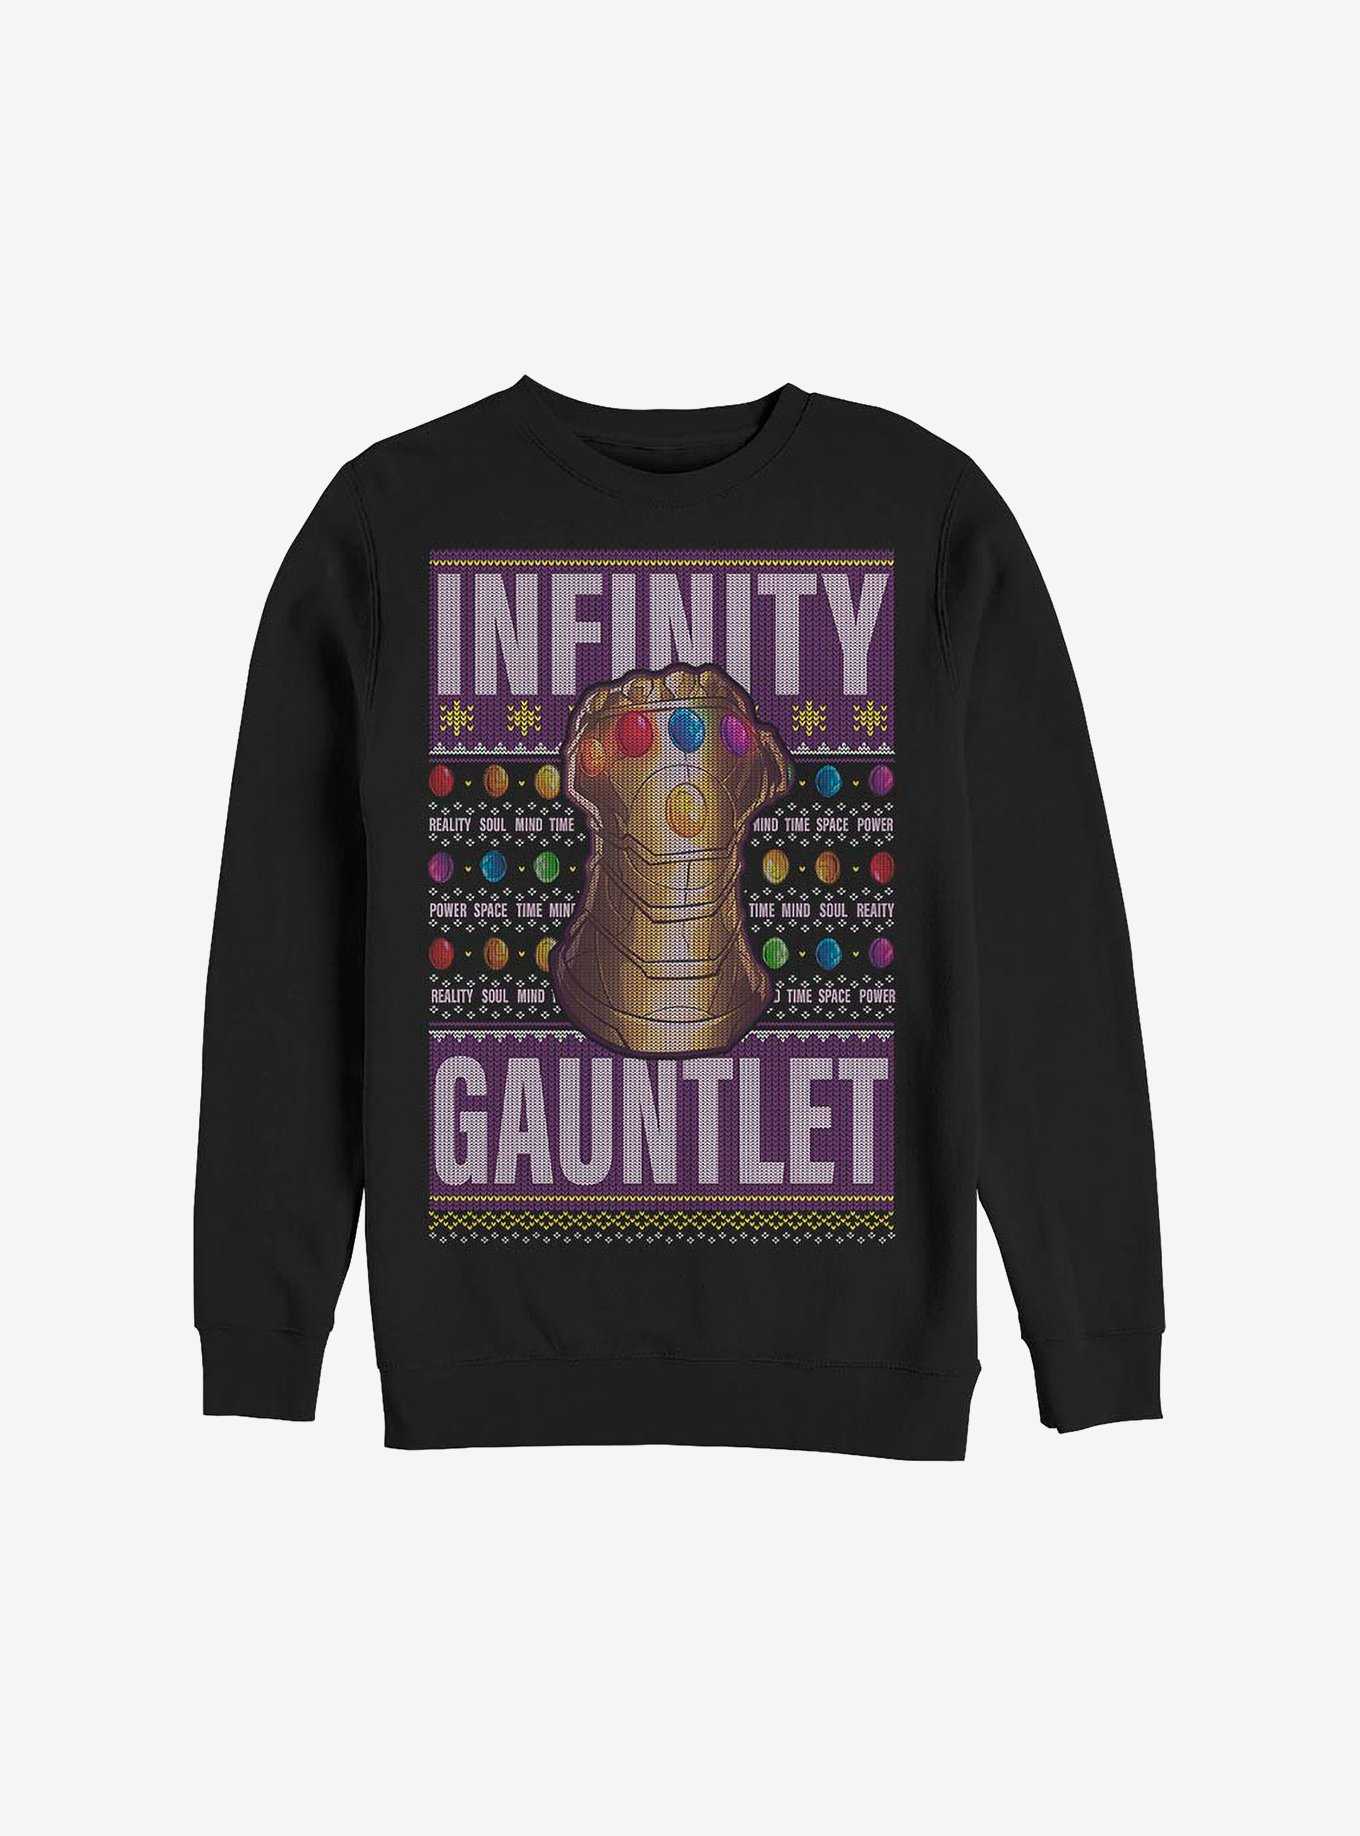 Marvel Avengers Guantlet Sweater Holiday Sweatshirt, , hi-res